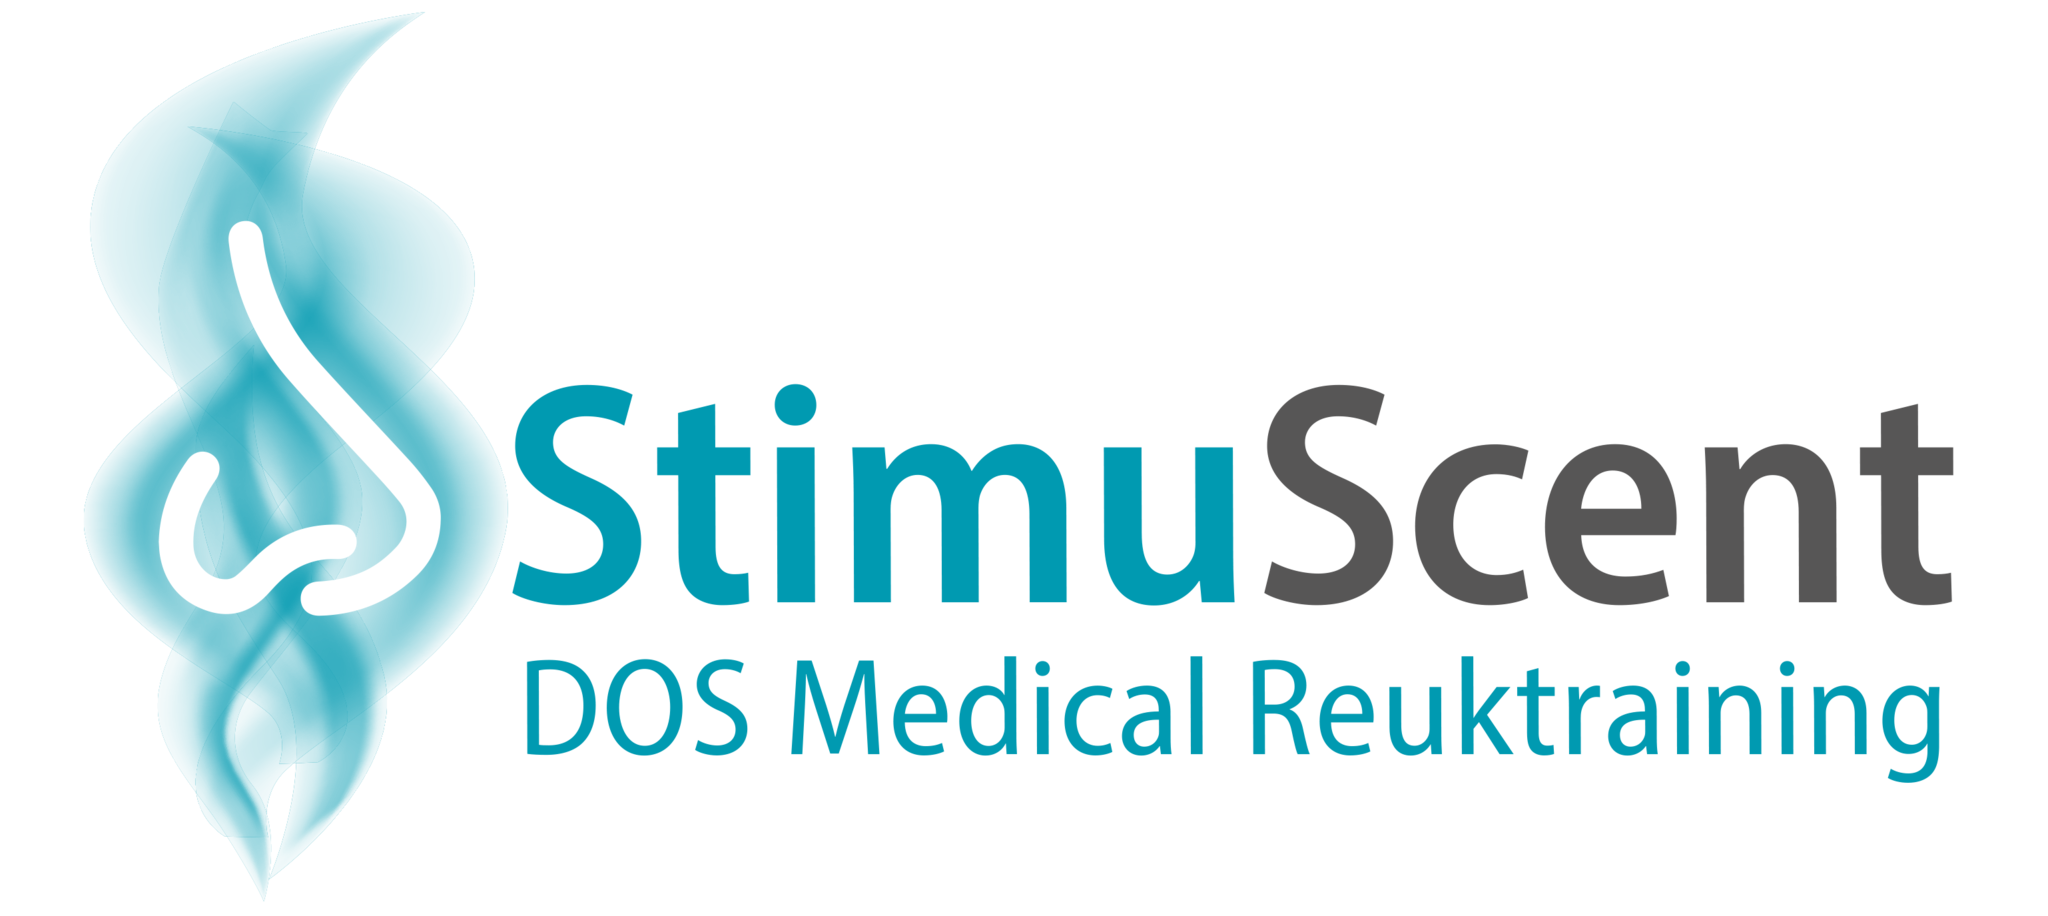 StimuScent reuktraining DOS Medical